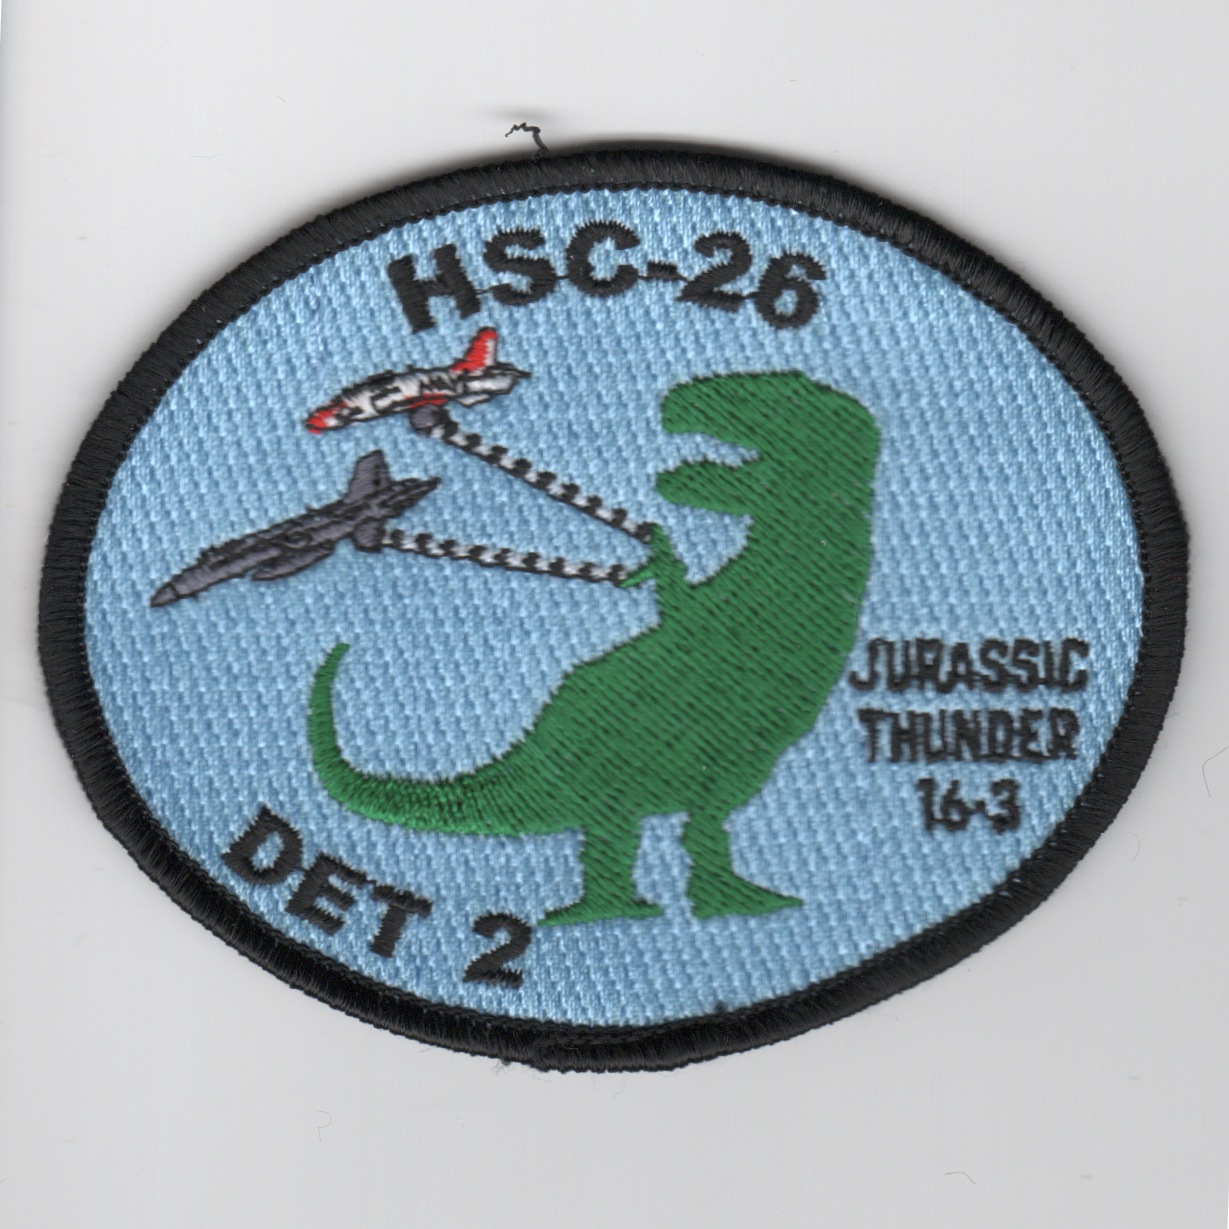 HSC-26 Det-2 'Jurassic 16-3' Patch